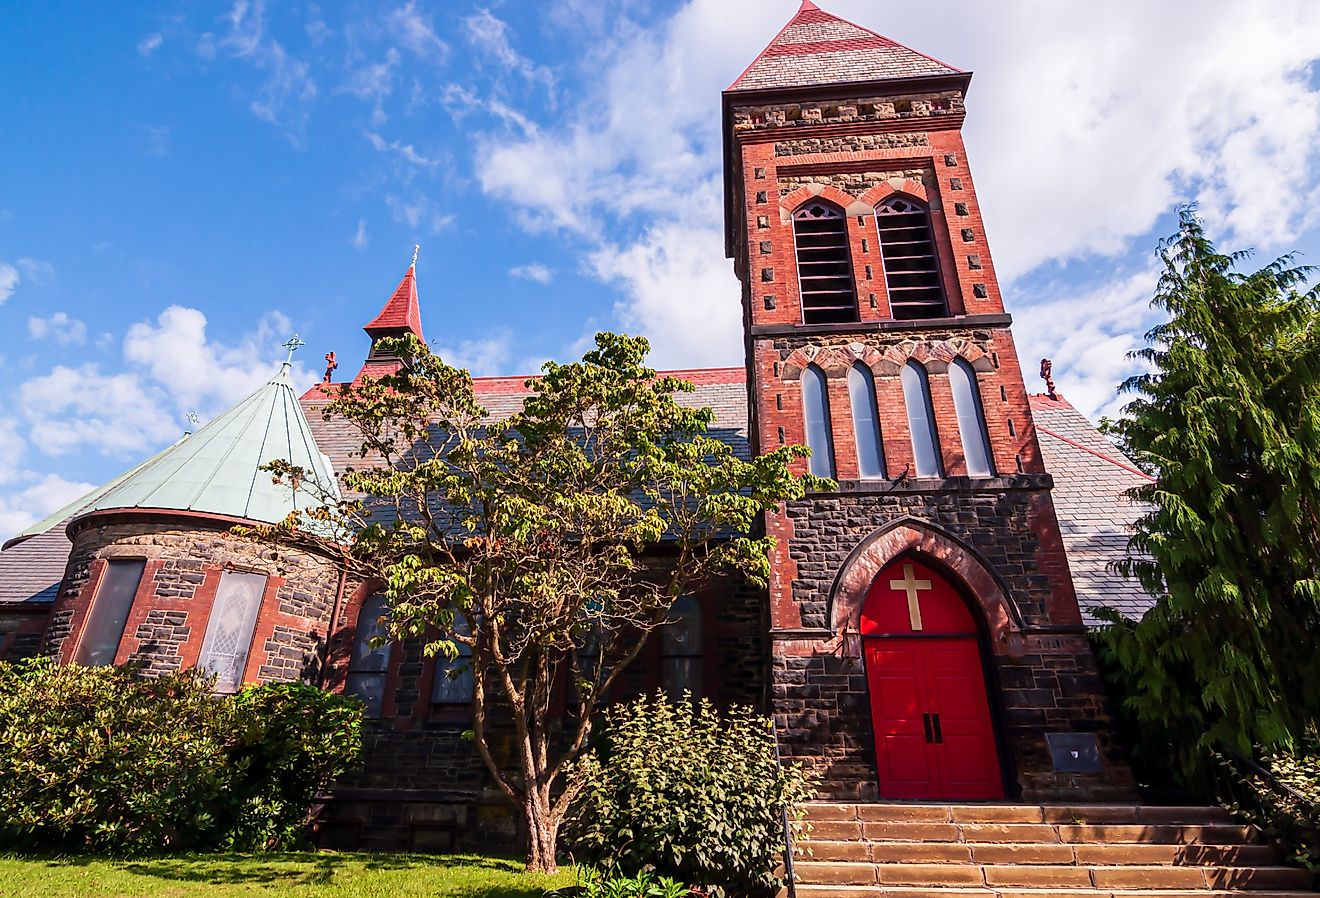 Christ Episcopal Church on Central Avenue, in Oil City, Pennsylvania. Image credit woodsnorthphoto via Shutterstock